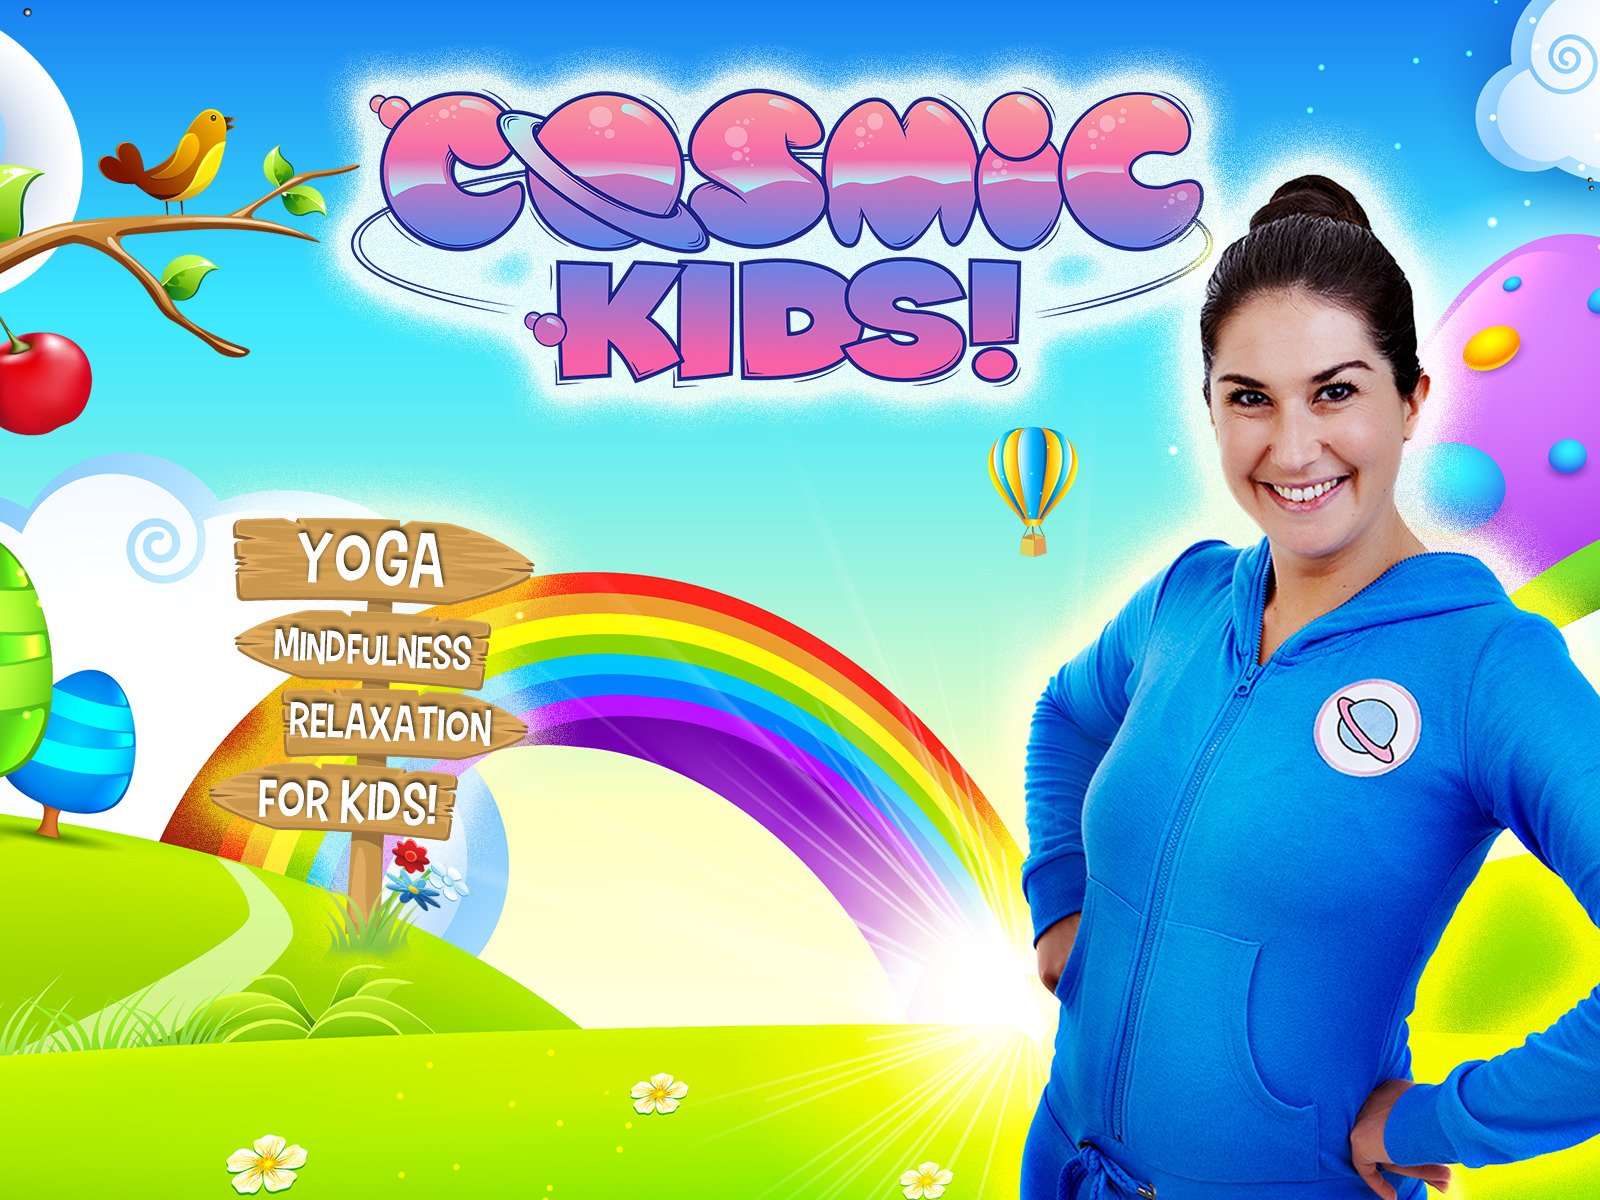 Cosmic Kids Yoga – Innisfil ideaLab & Library